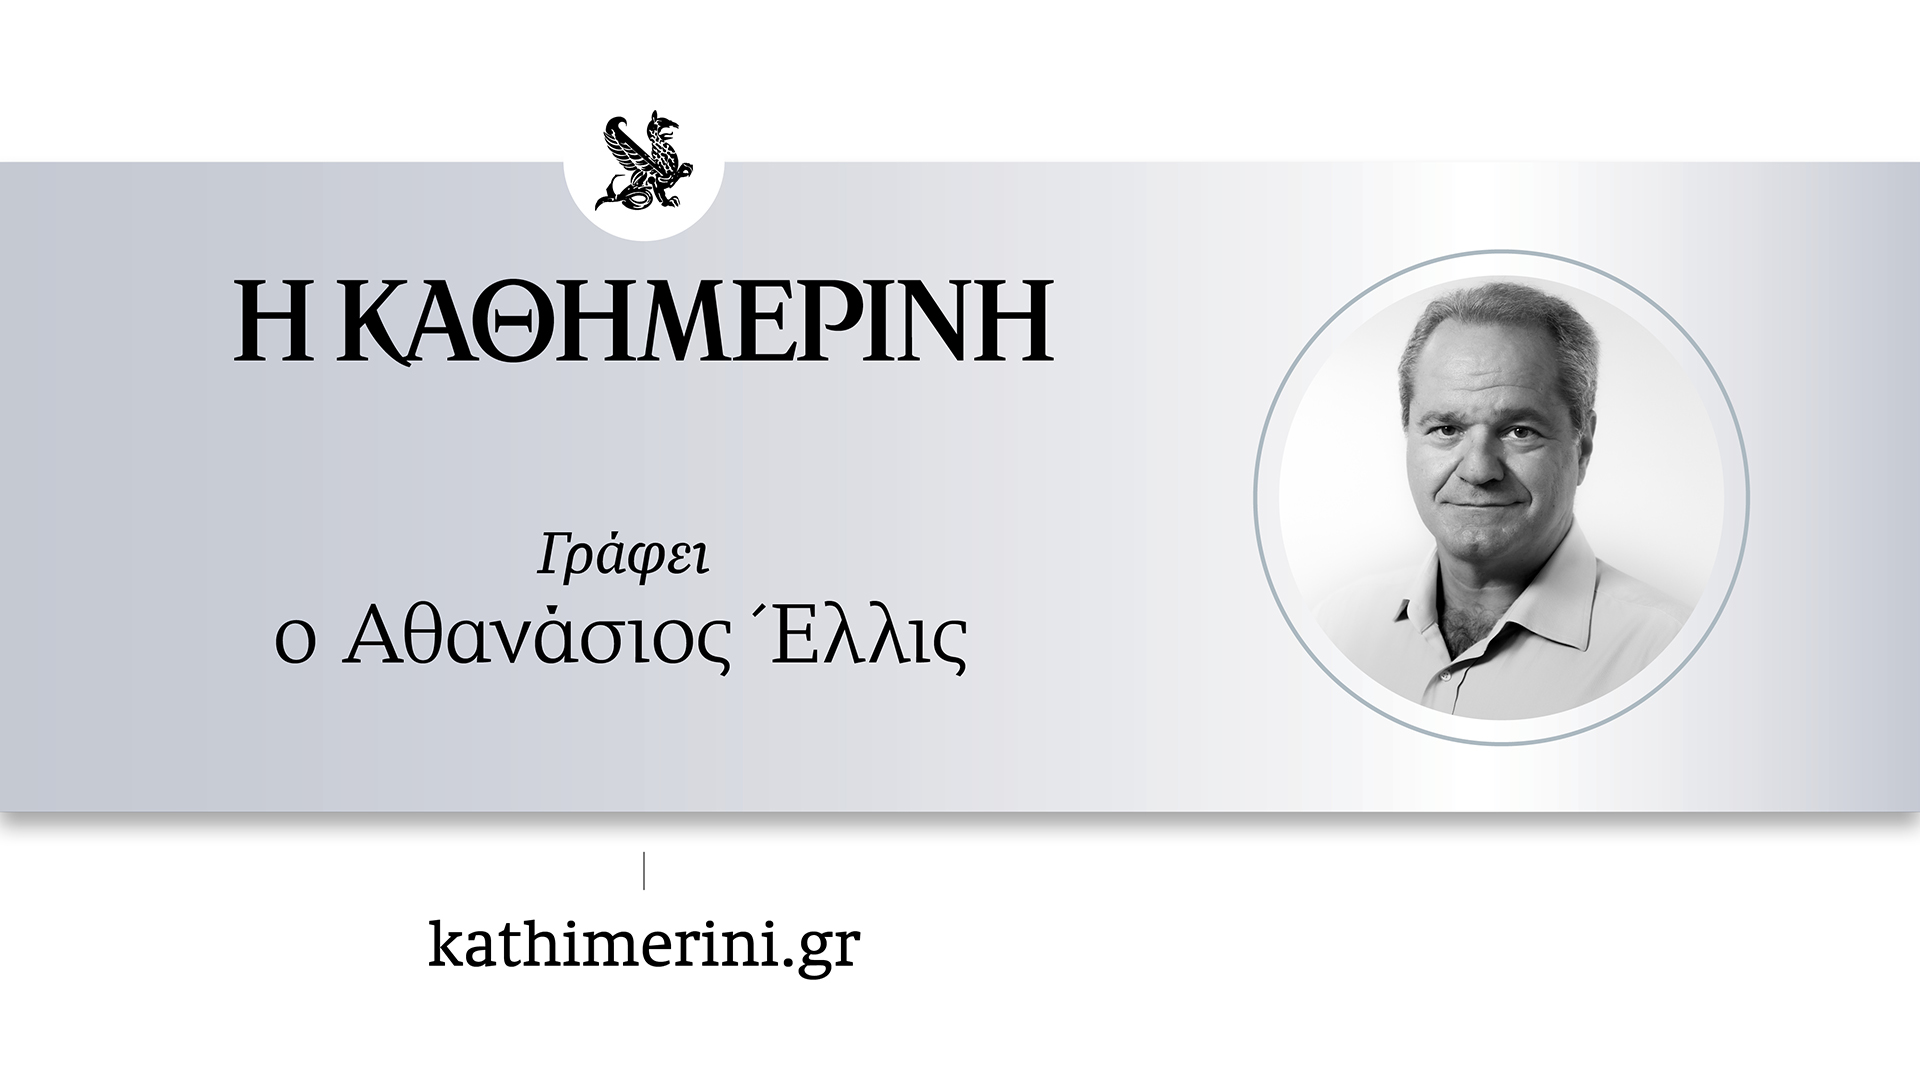 www.kathimerini.gr